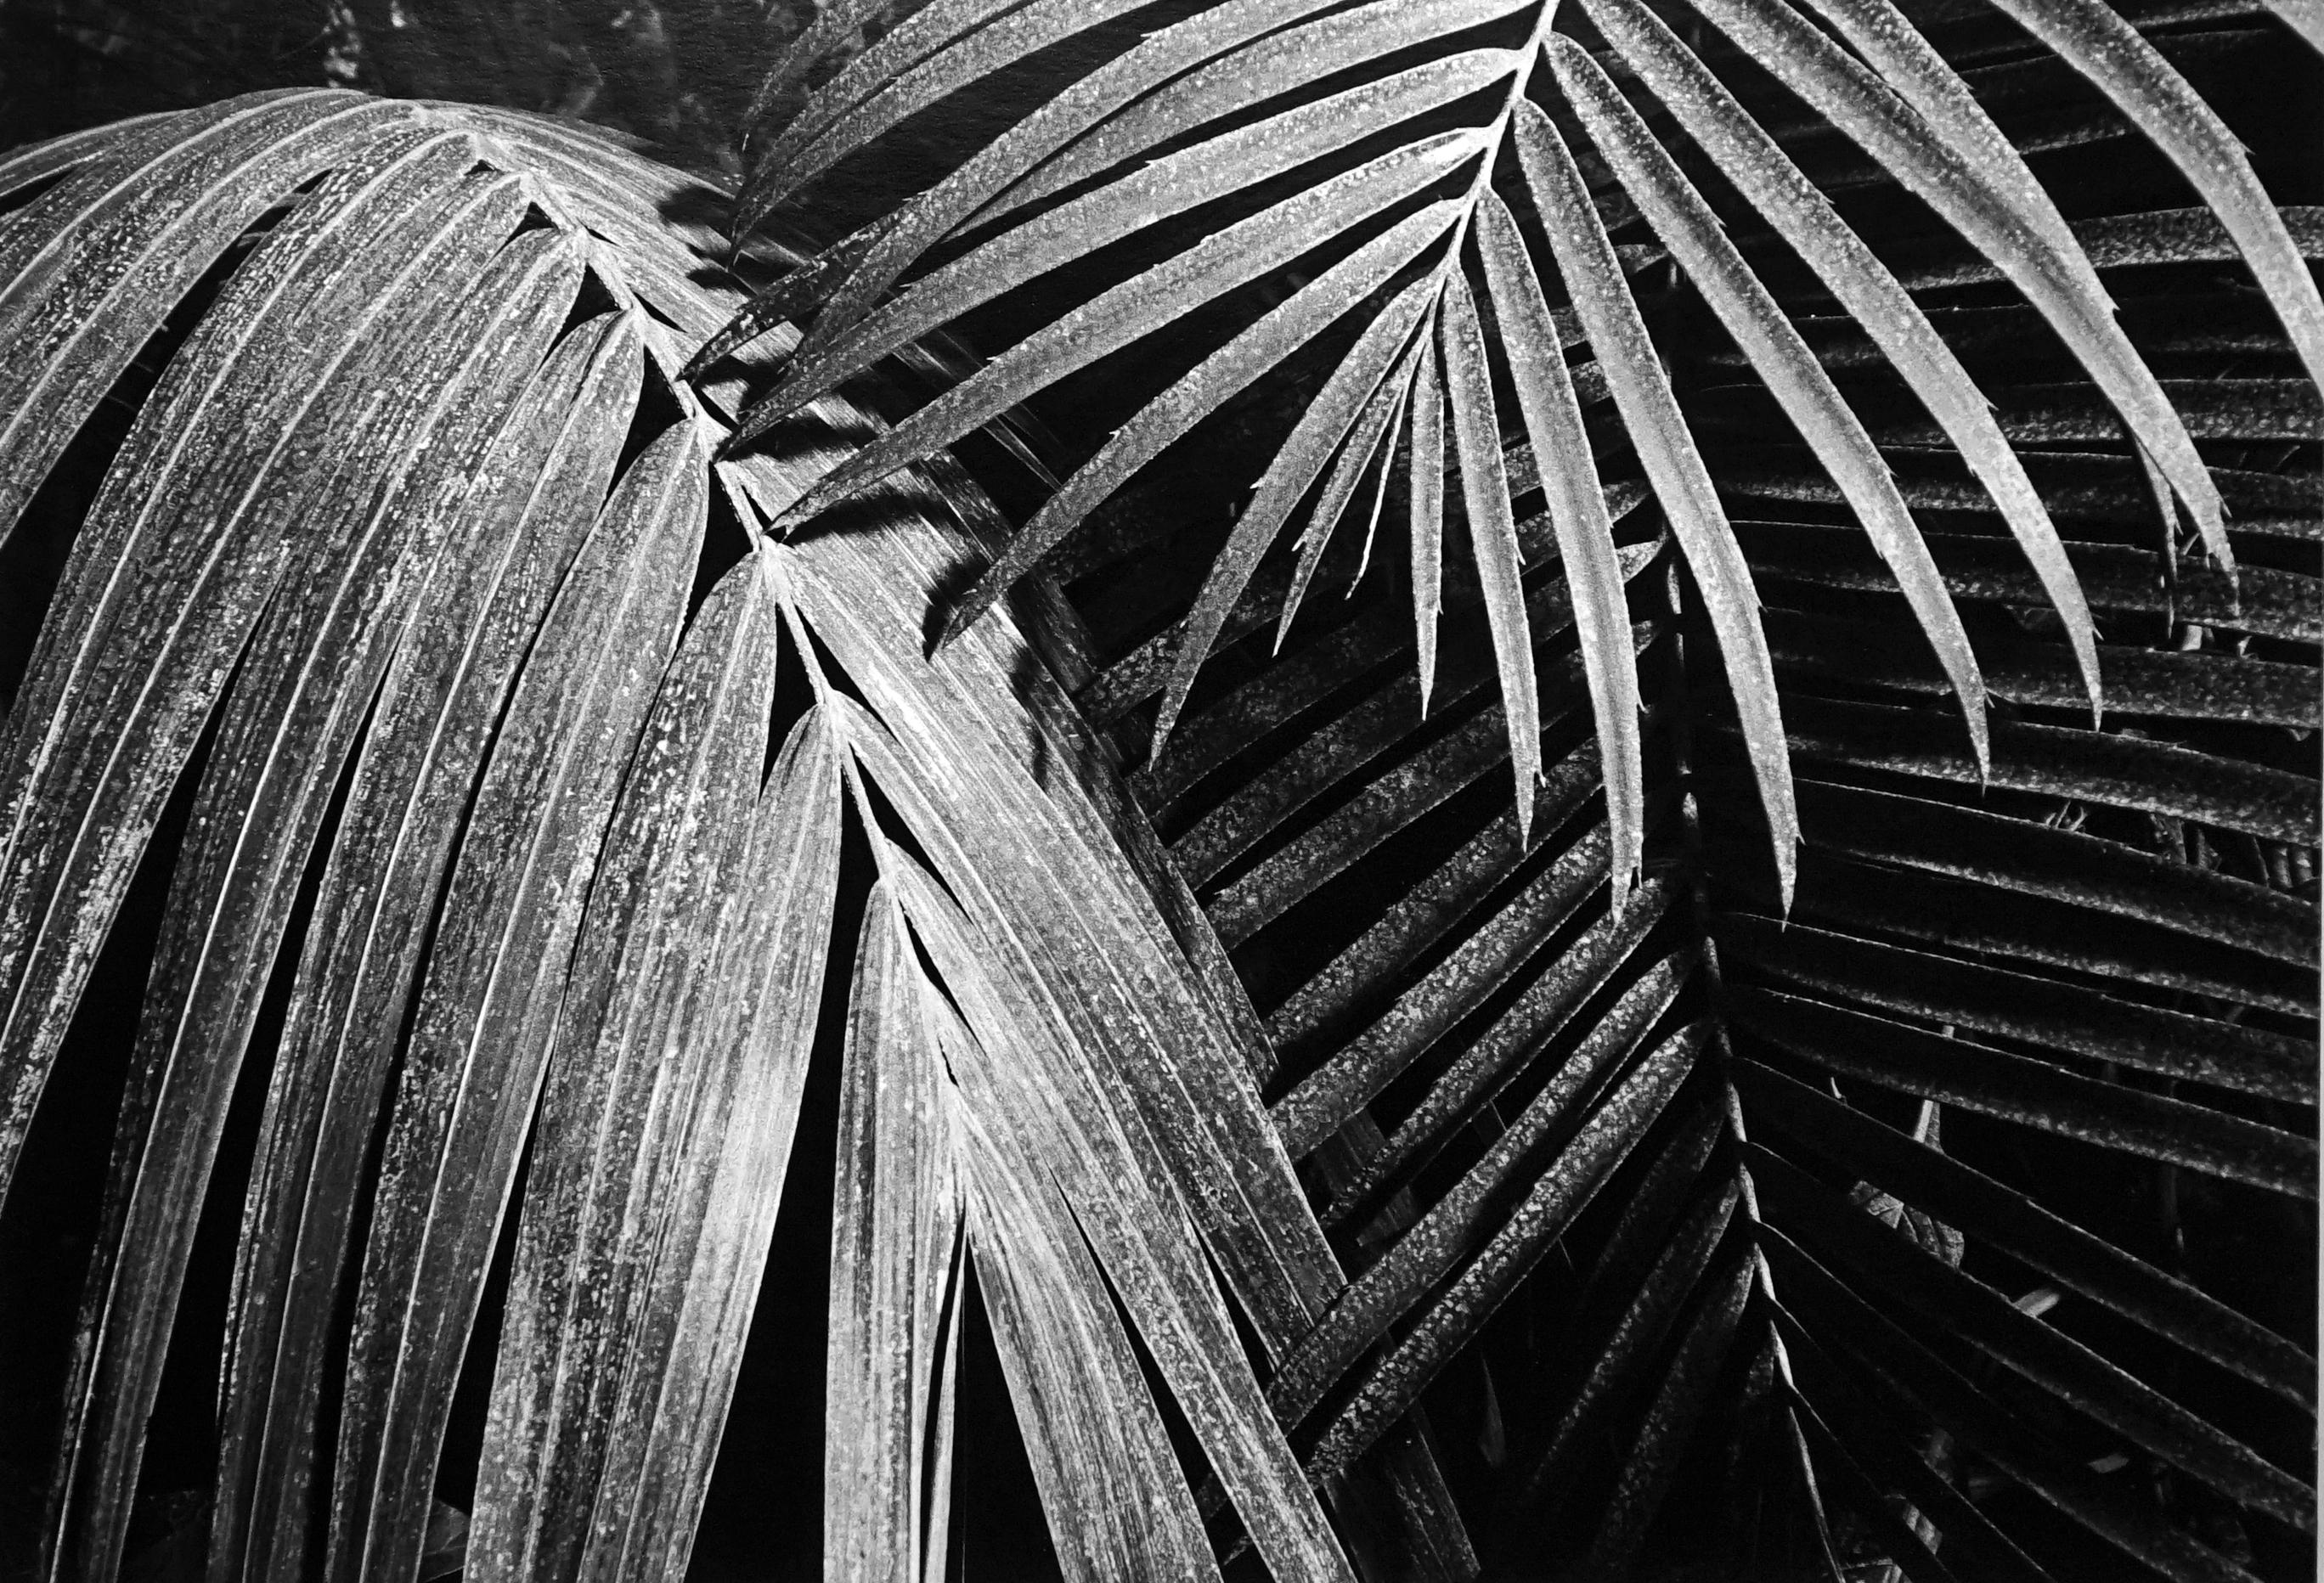 Black and White Photograph Jörg Krichbaum - Jardin - Off-White # 1 - 1979 - Photographie minimaliste en noir et blanc